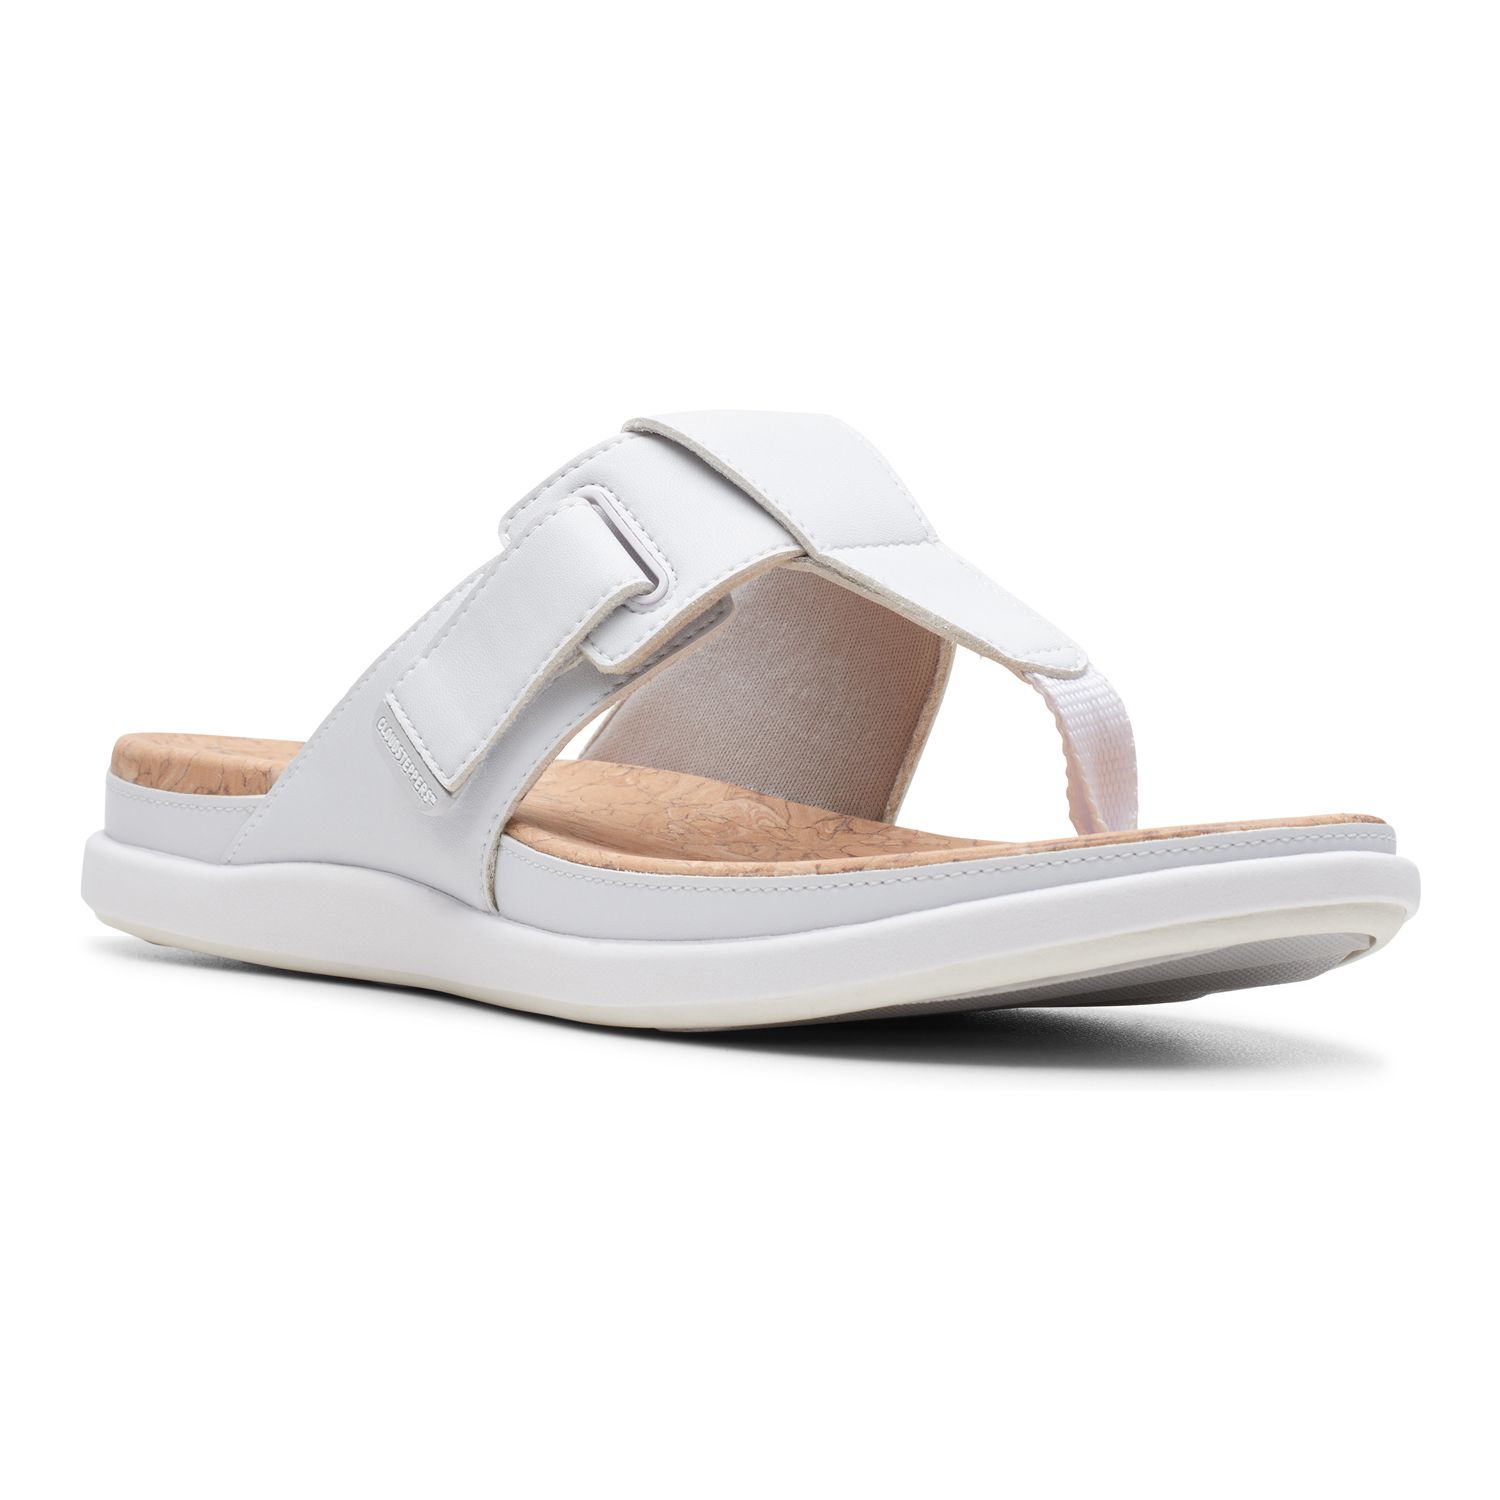 clarks lightweight comfort sandals